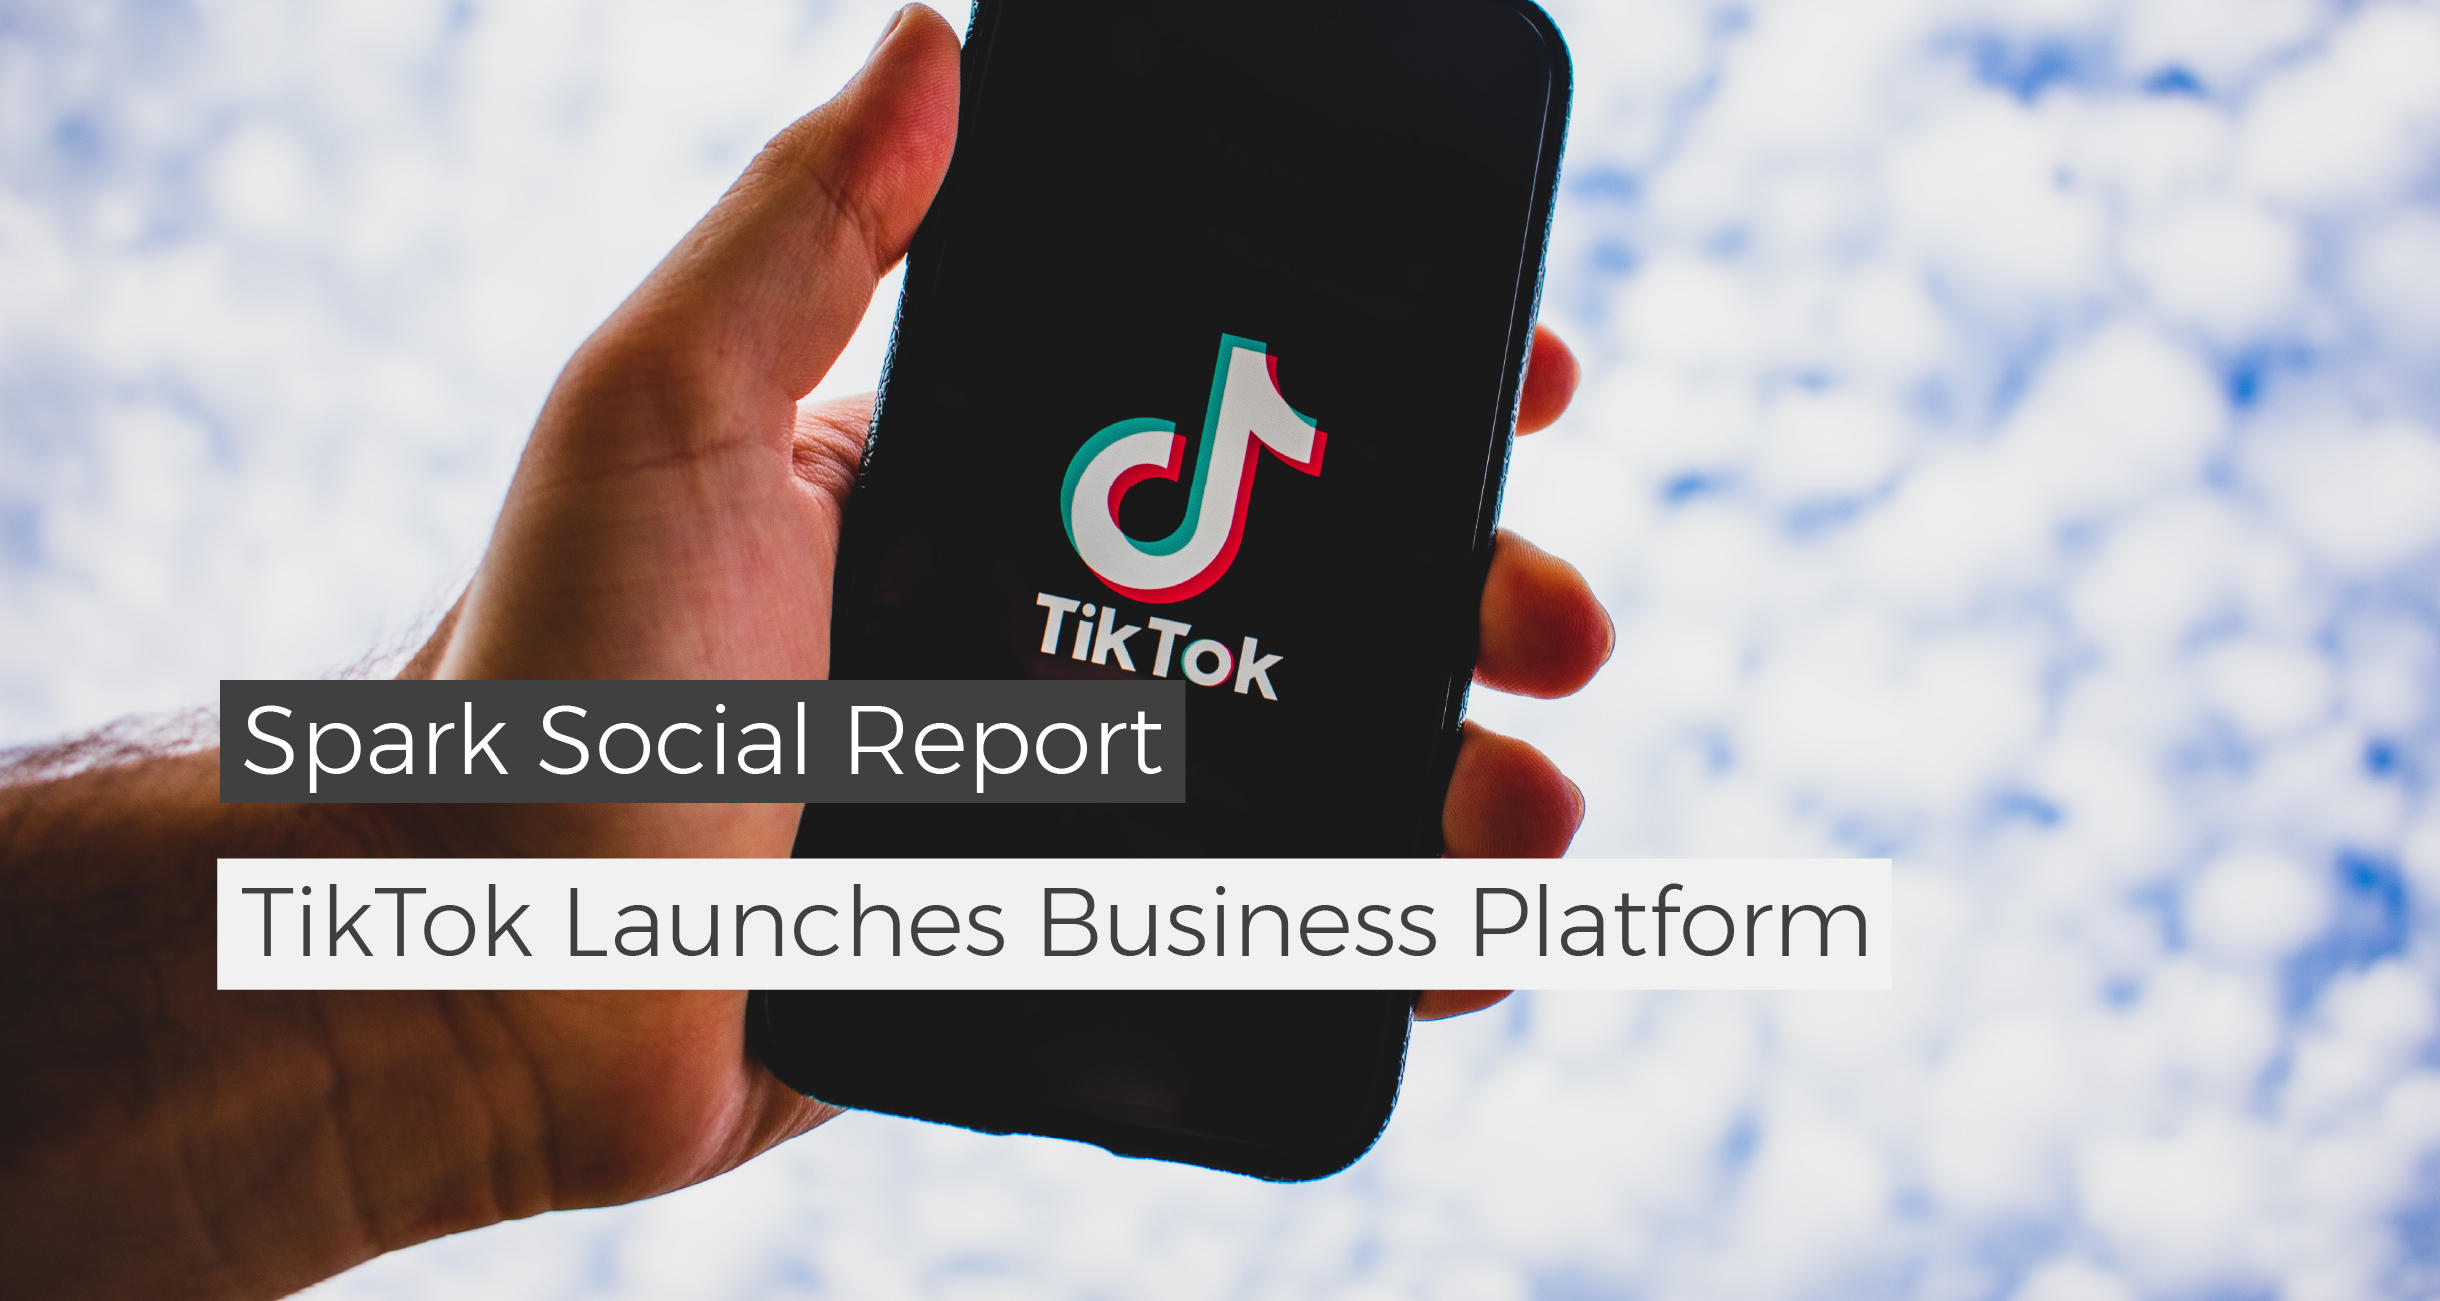 TikTok launches Business Platform